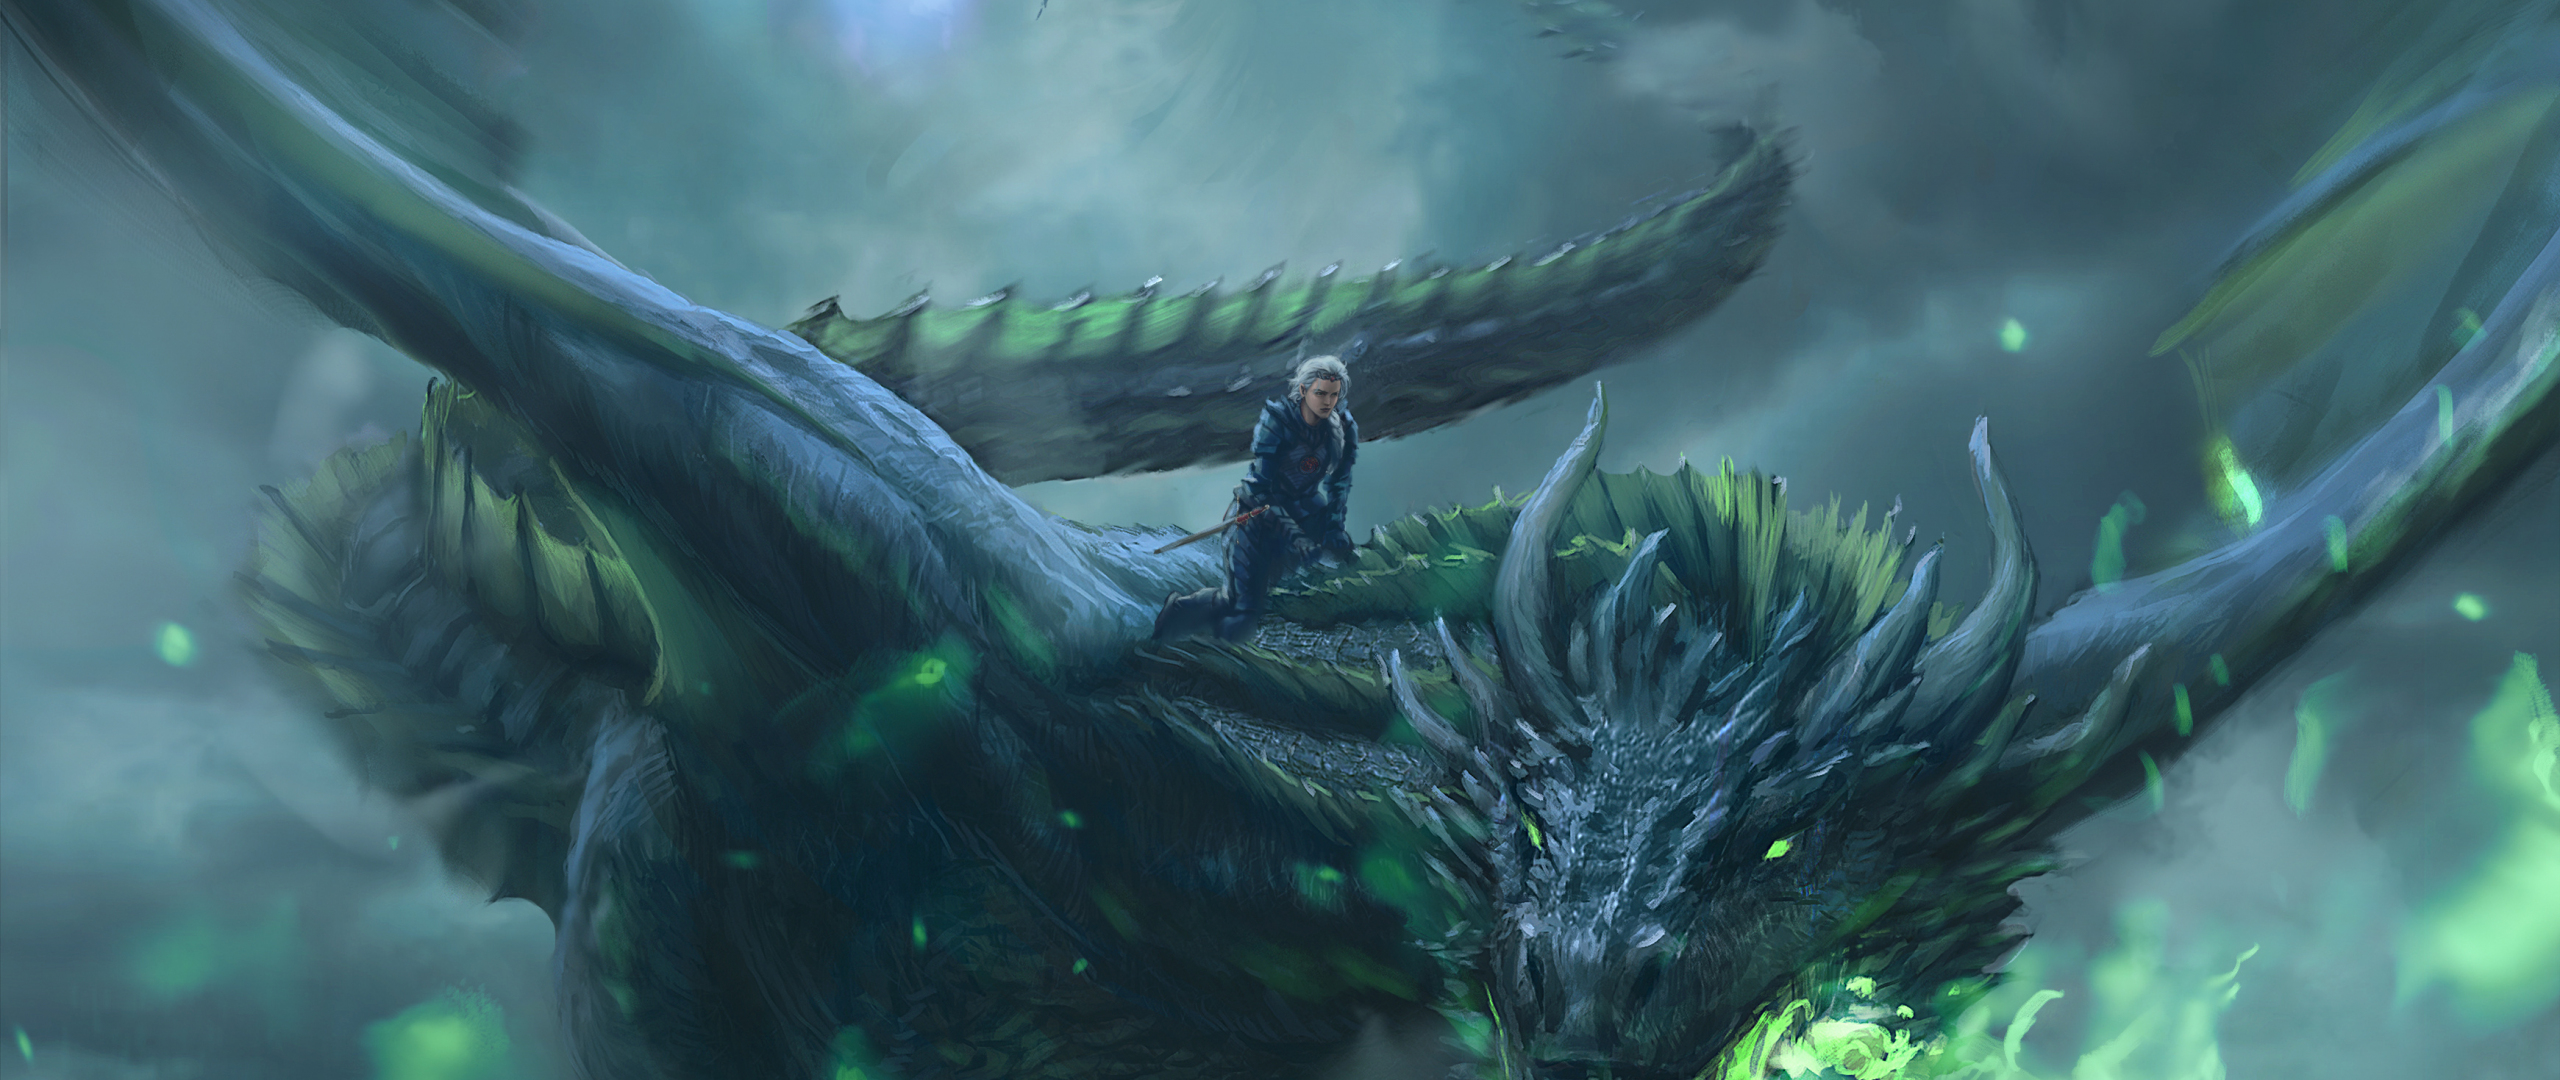 Download daenerys targaryen, dragon ride, game of thrones, digital art 2560x1080 wallpaper, dual wide 2560x1080 HD image, background, 7778